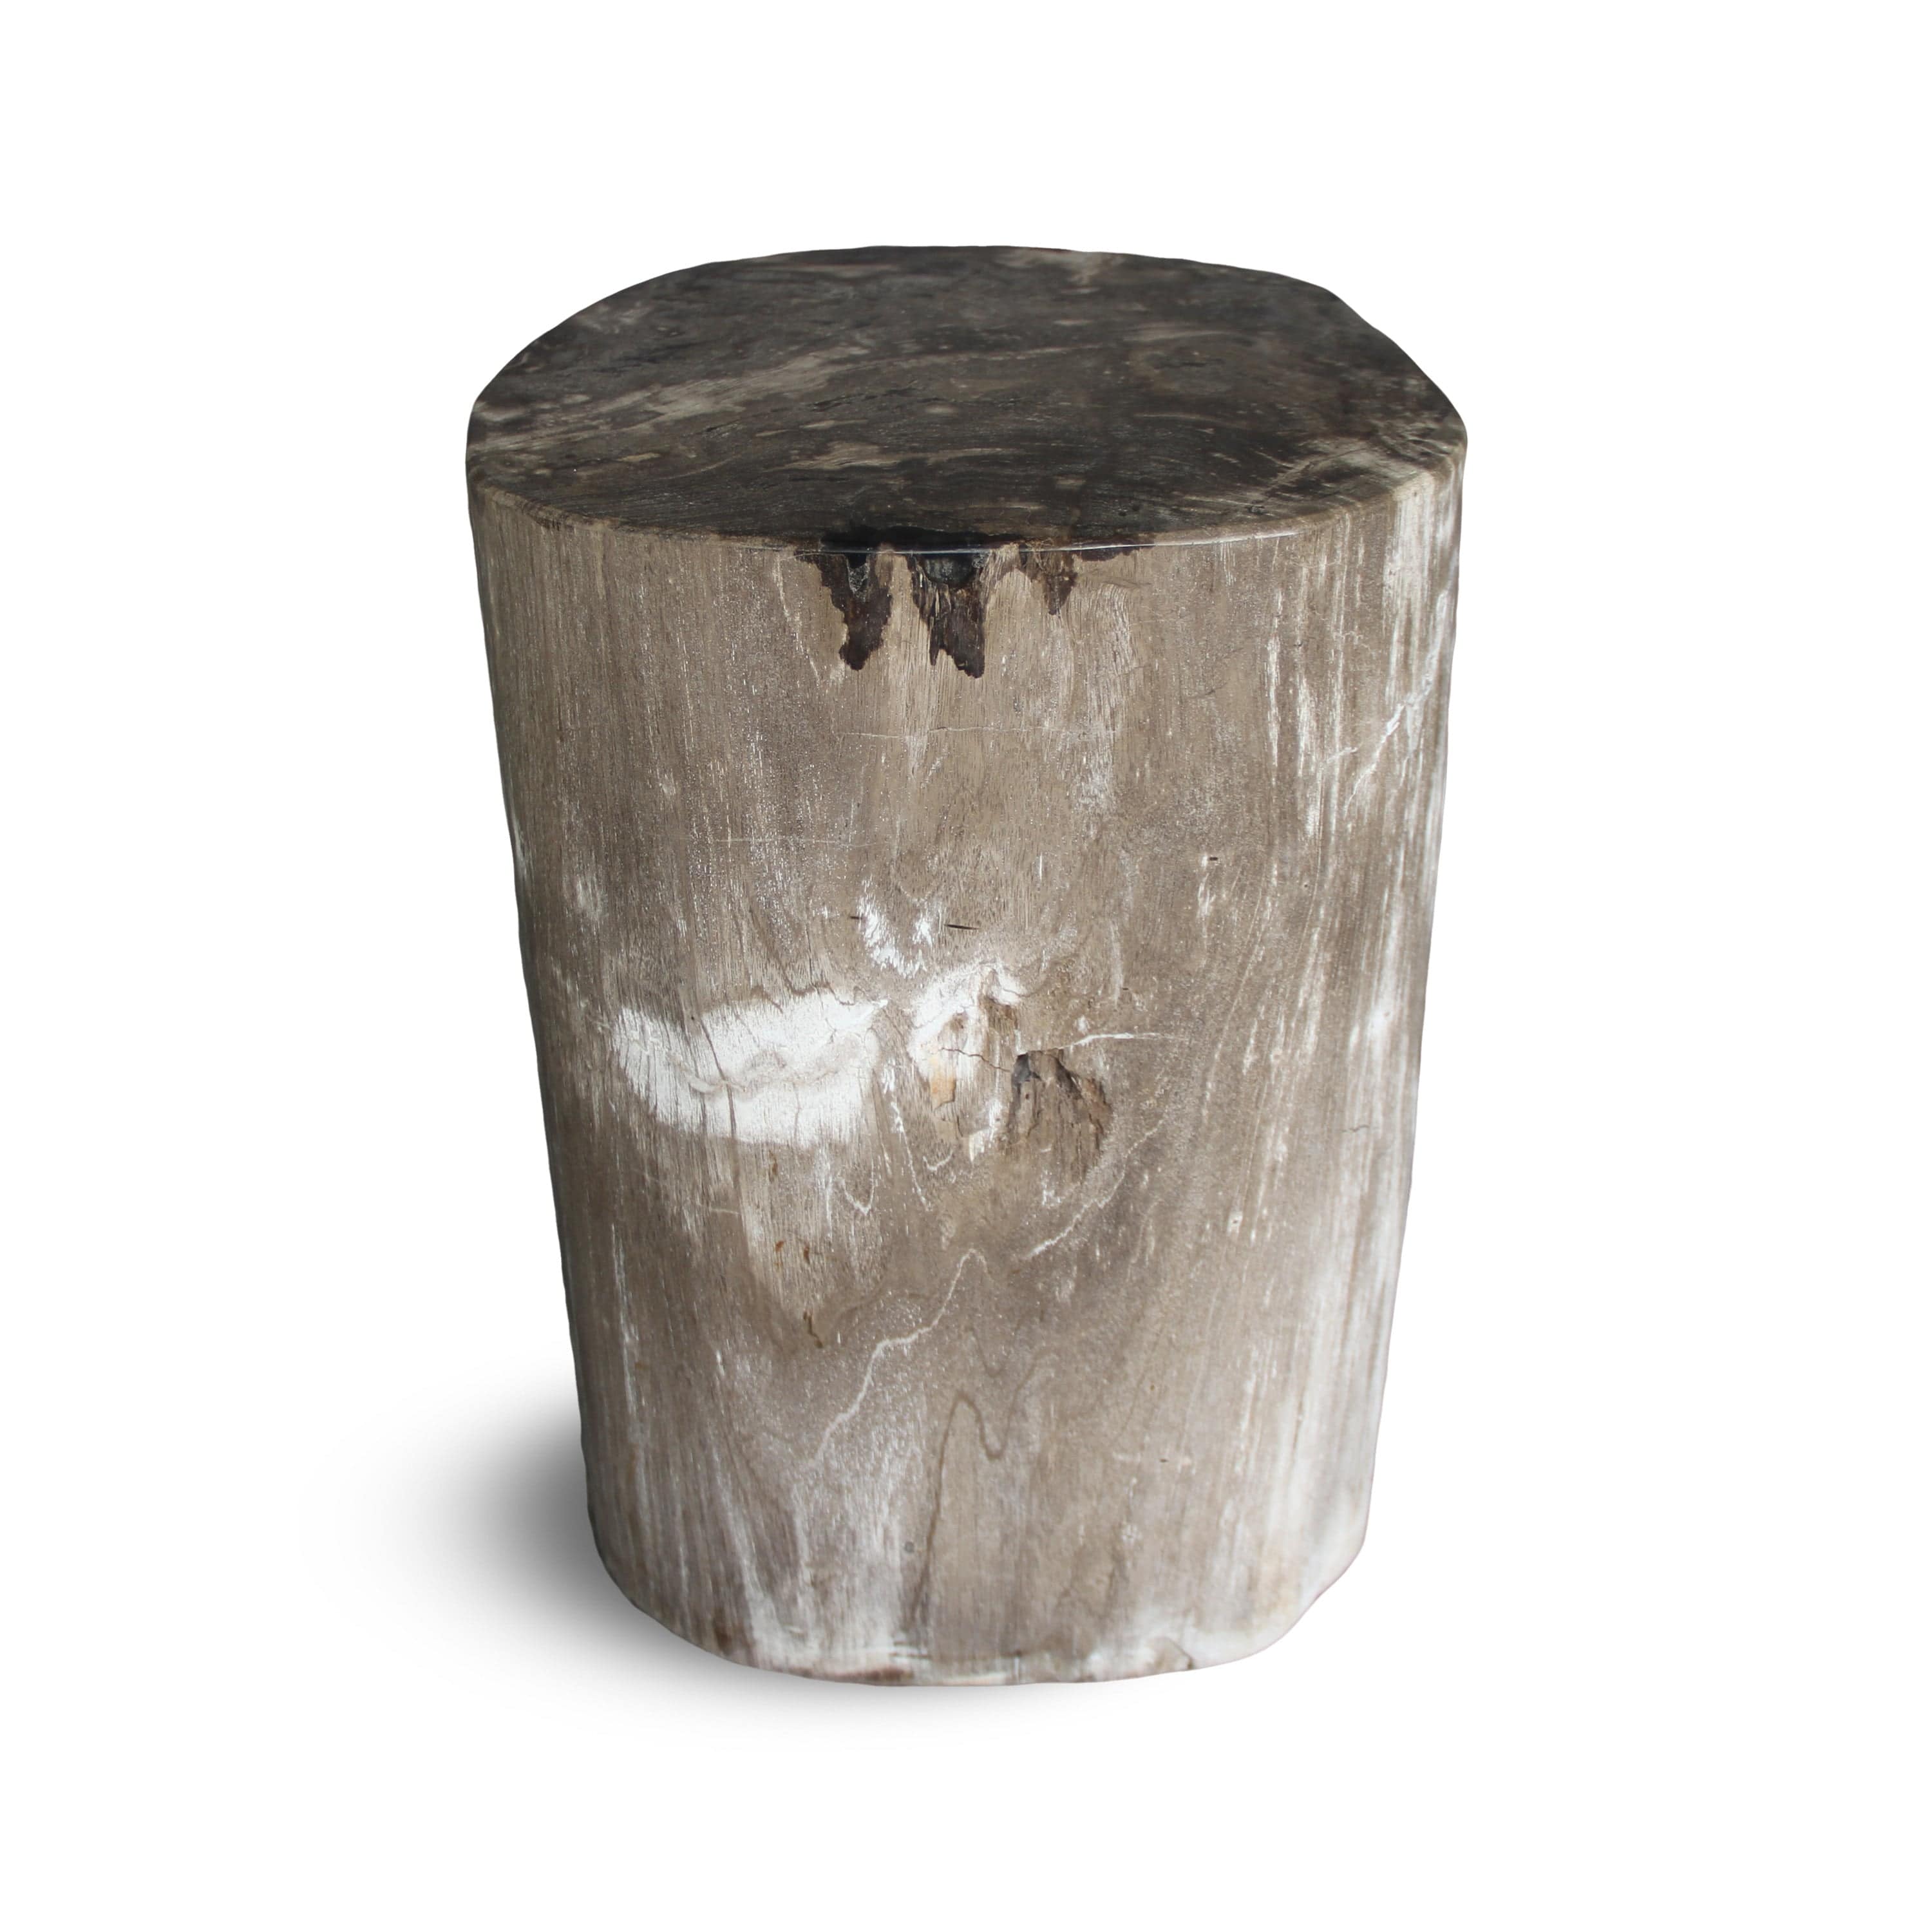 Kalifano Petrified Wood Petrified Wood Round Stump / Stool from Indonesia - 16" / 152 lbs PWS2800.006